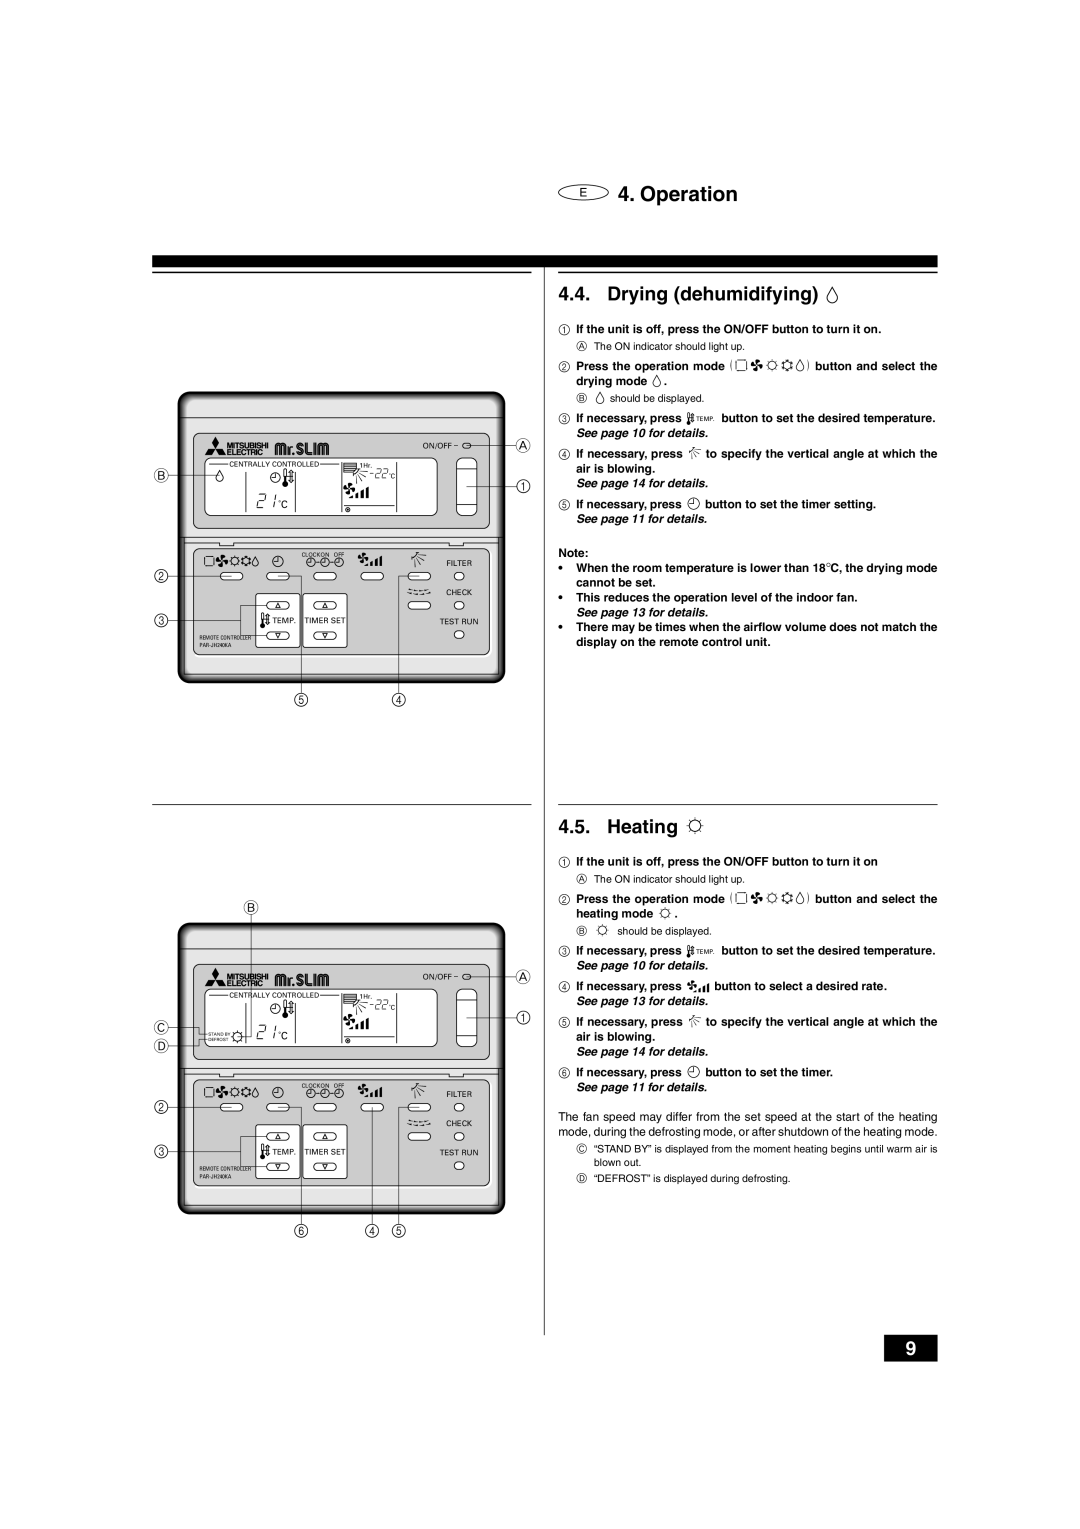 Mitsubishi Electronics PLH-2, 2.5KKC operation manual Drying dehumidifying, Heating 